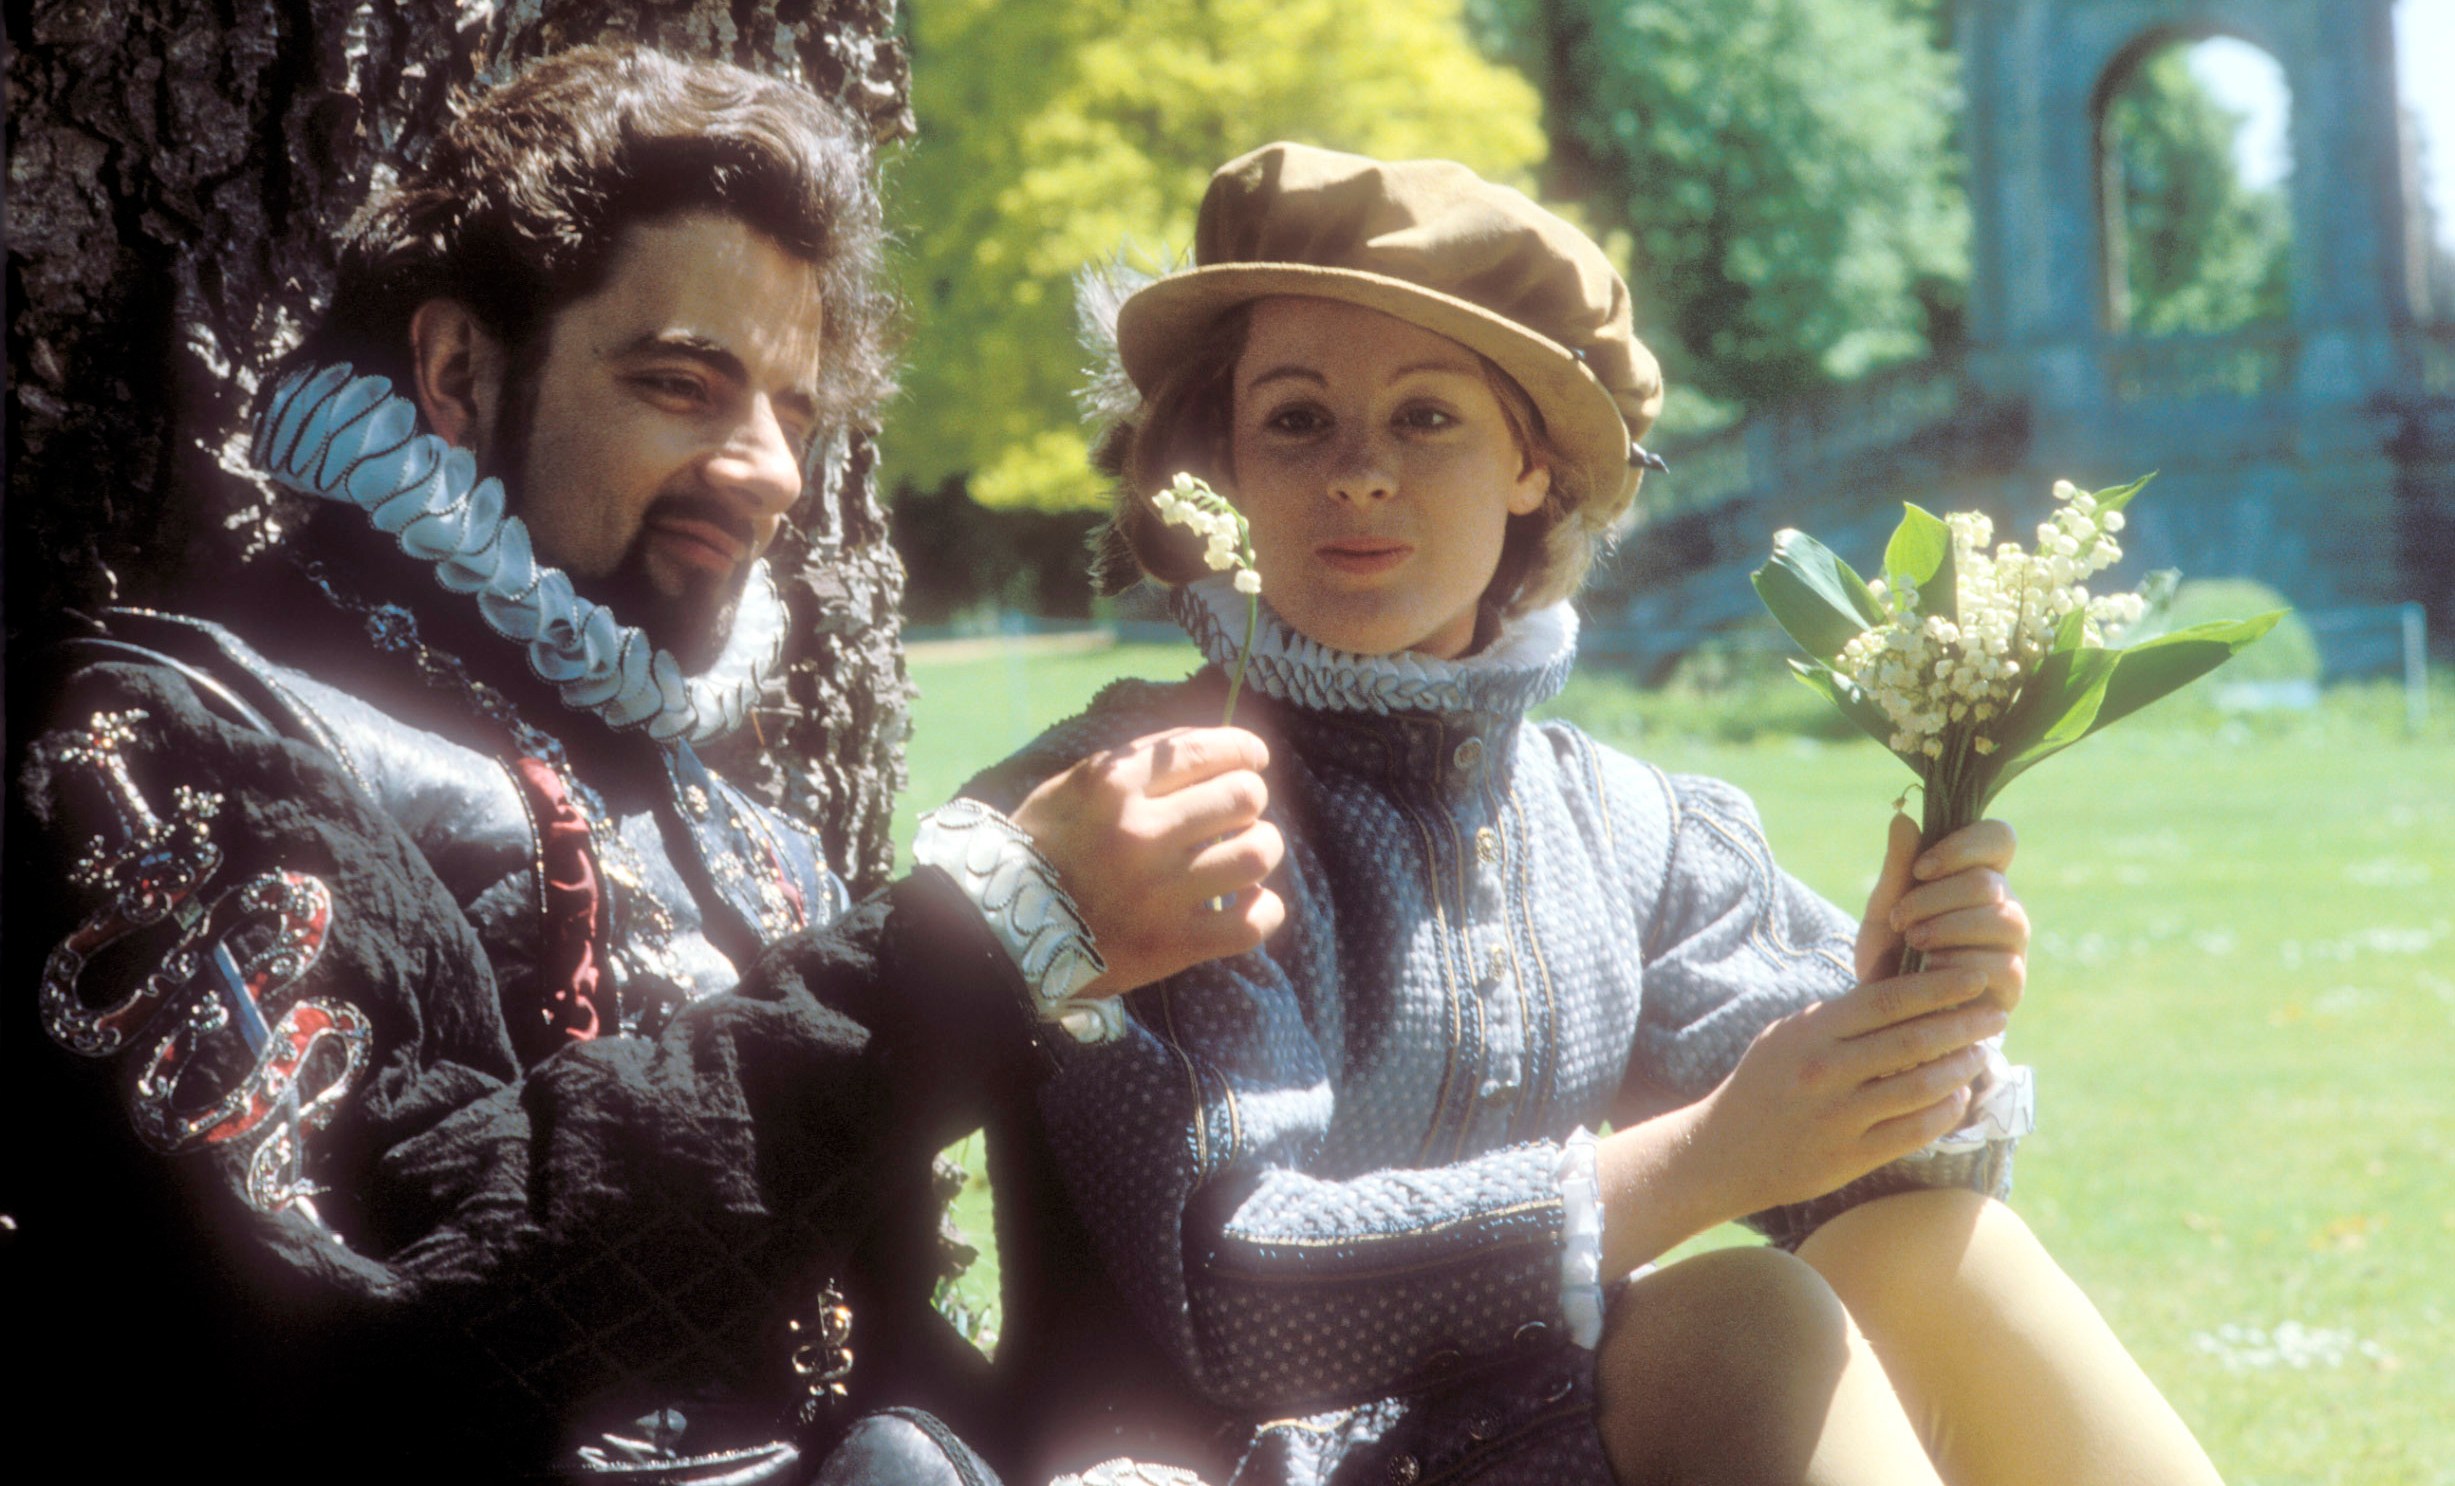 Gabrielle Glaister as Kate/Bob and Rowan Atkinson as Blackadder in Blackadder II